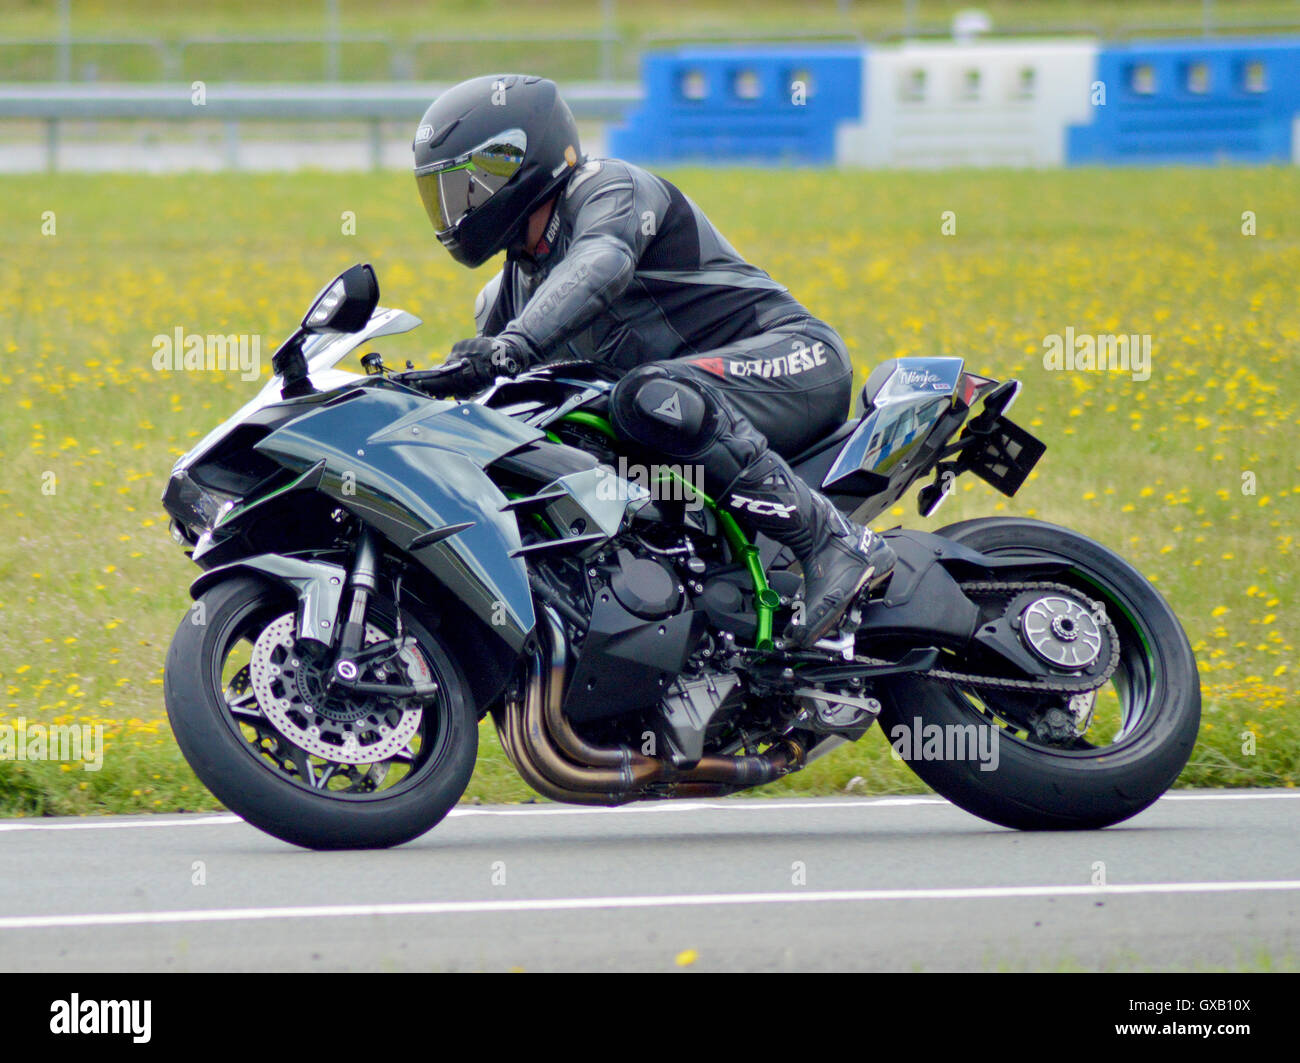 Kawasaki ninja h2 hi-res stock photography and images - Alamy